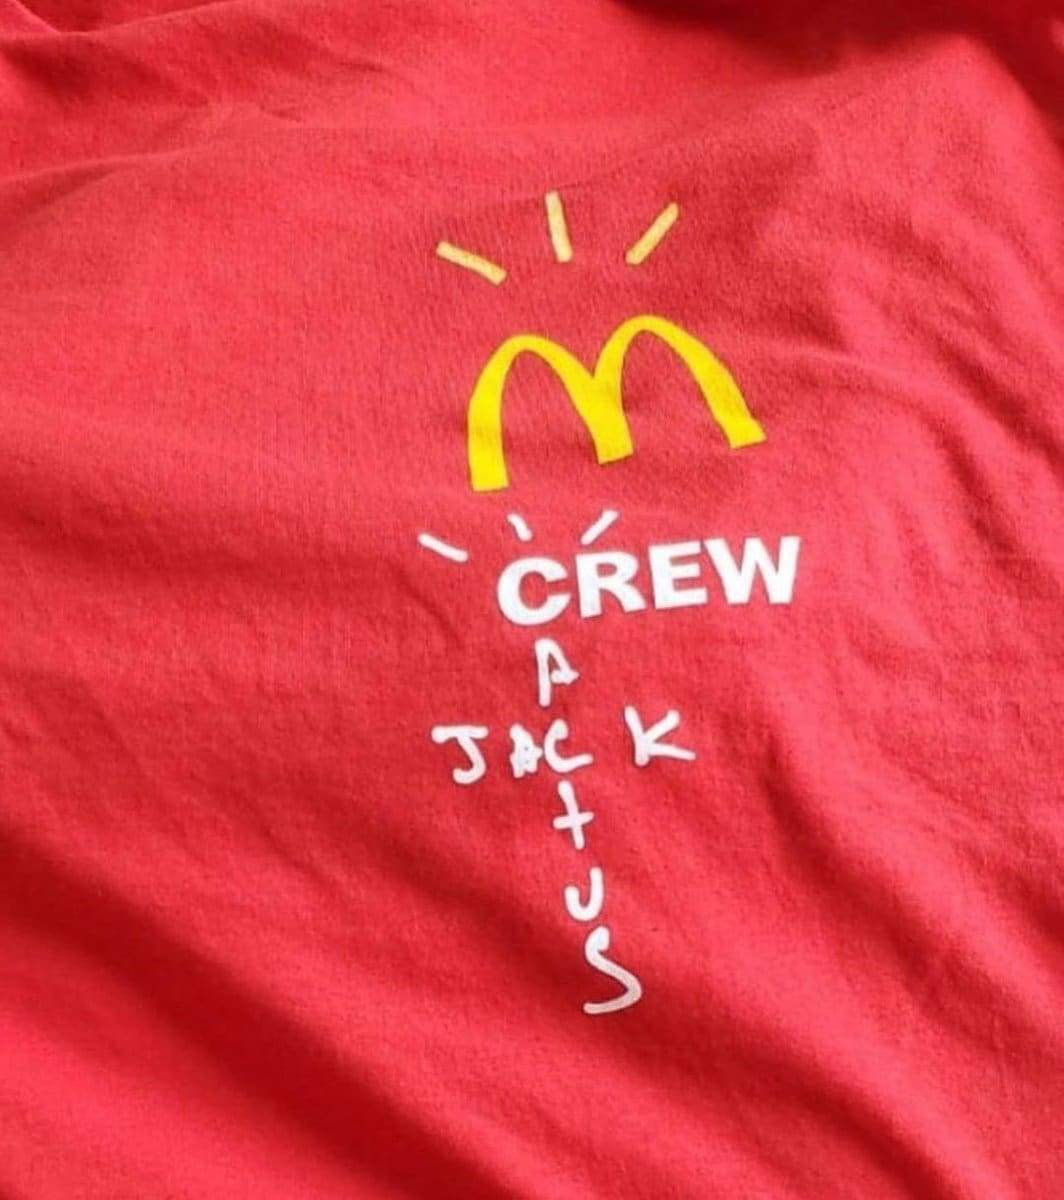 red mcdonalds shirt